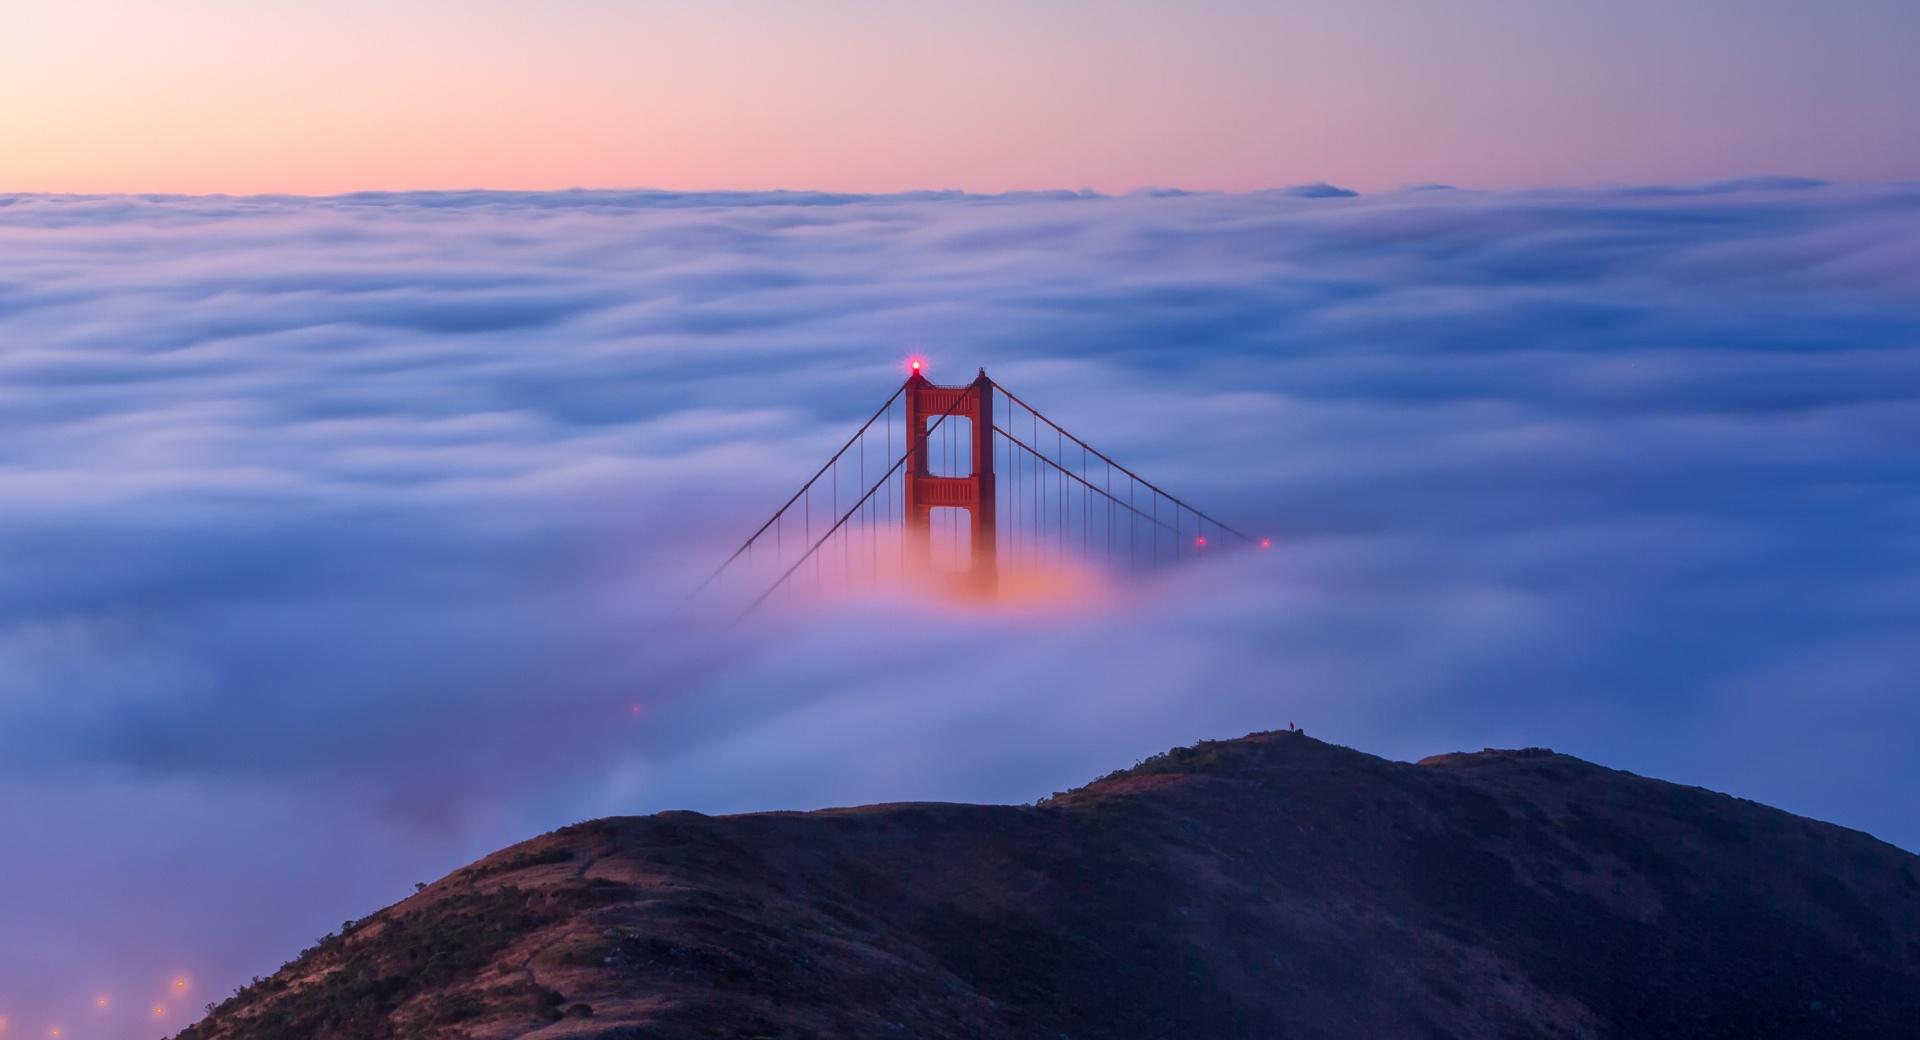 Golden Gate Bridge Fog Sunrise at 1600 x 1200 size wallpapers HD quality